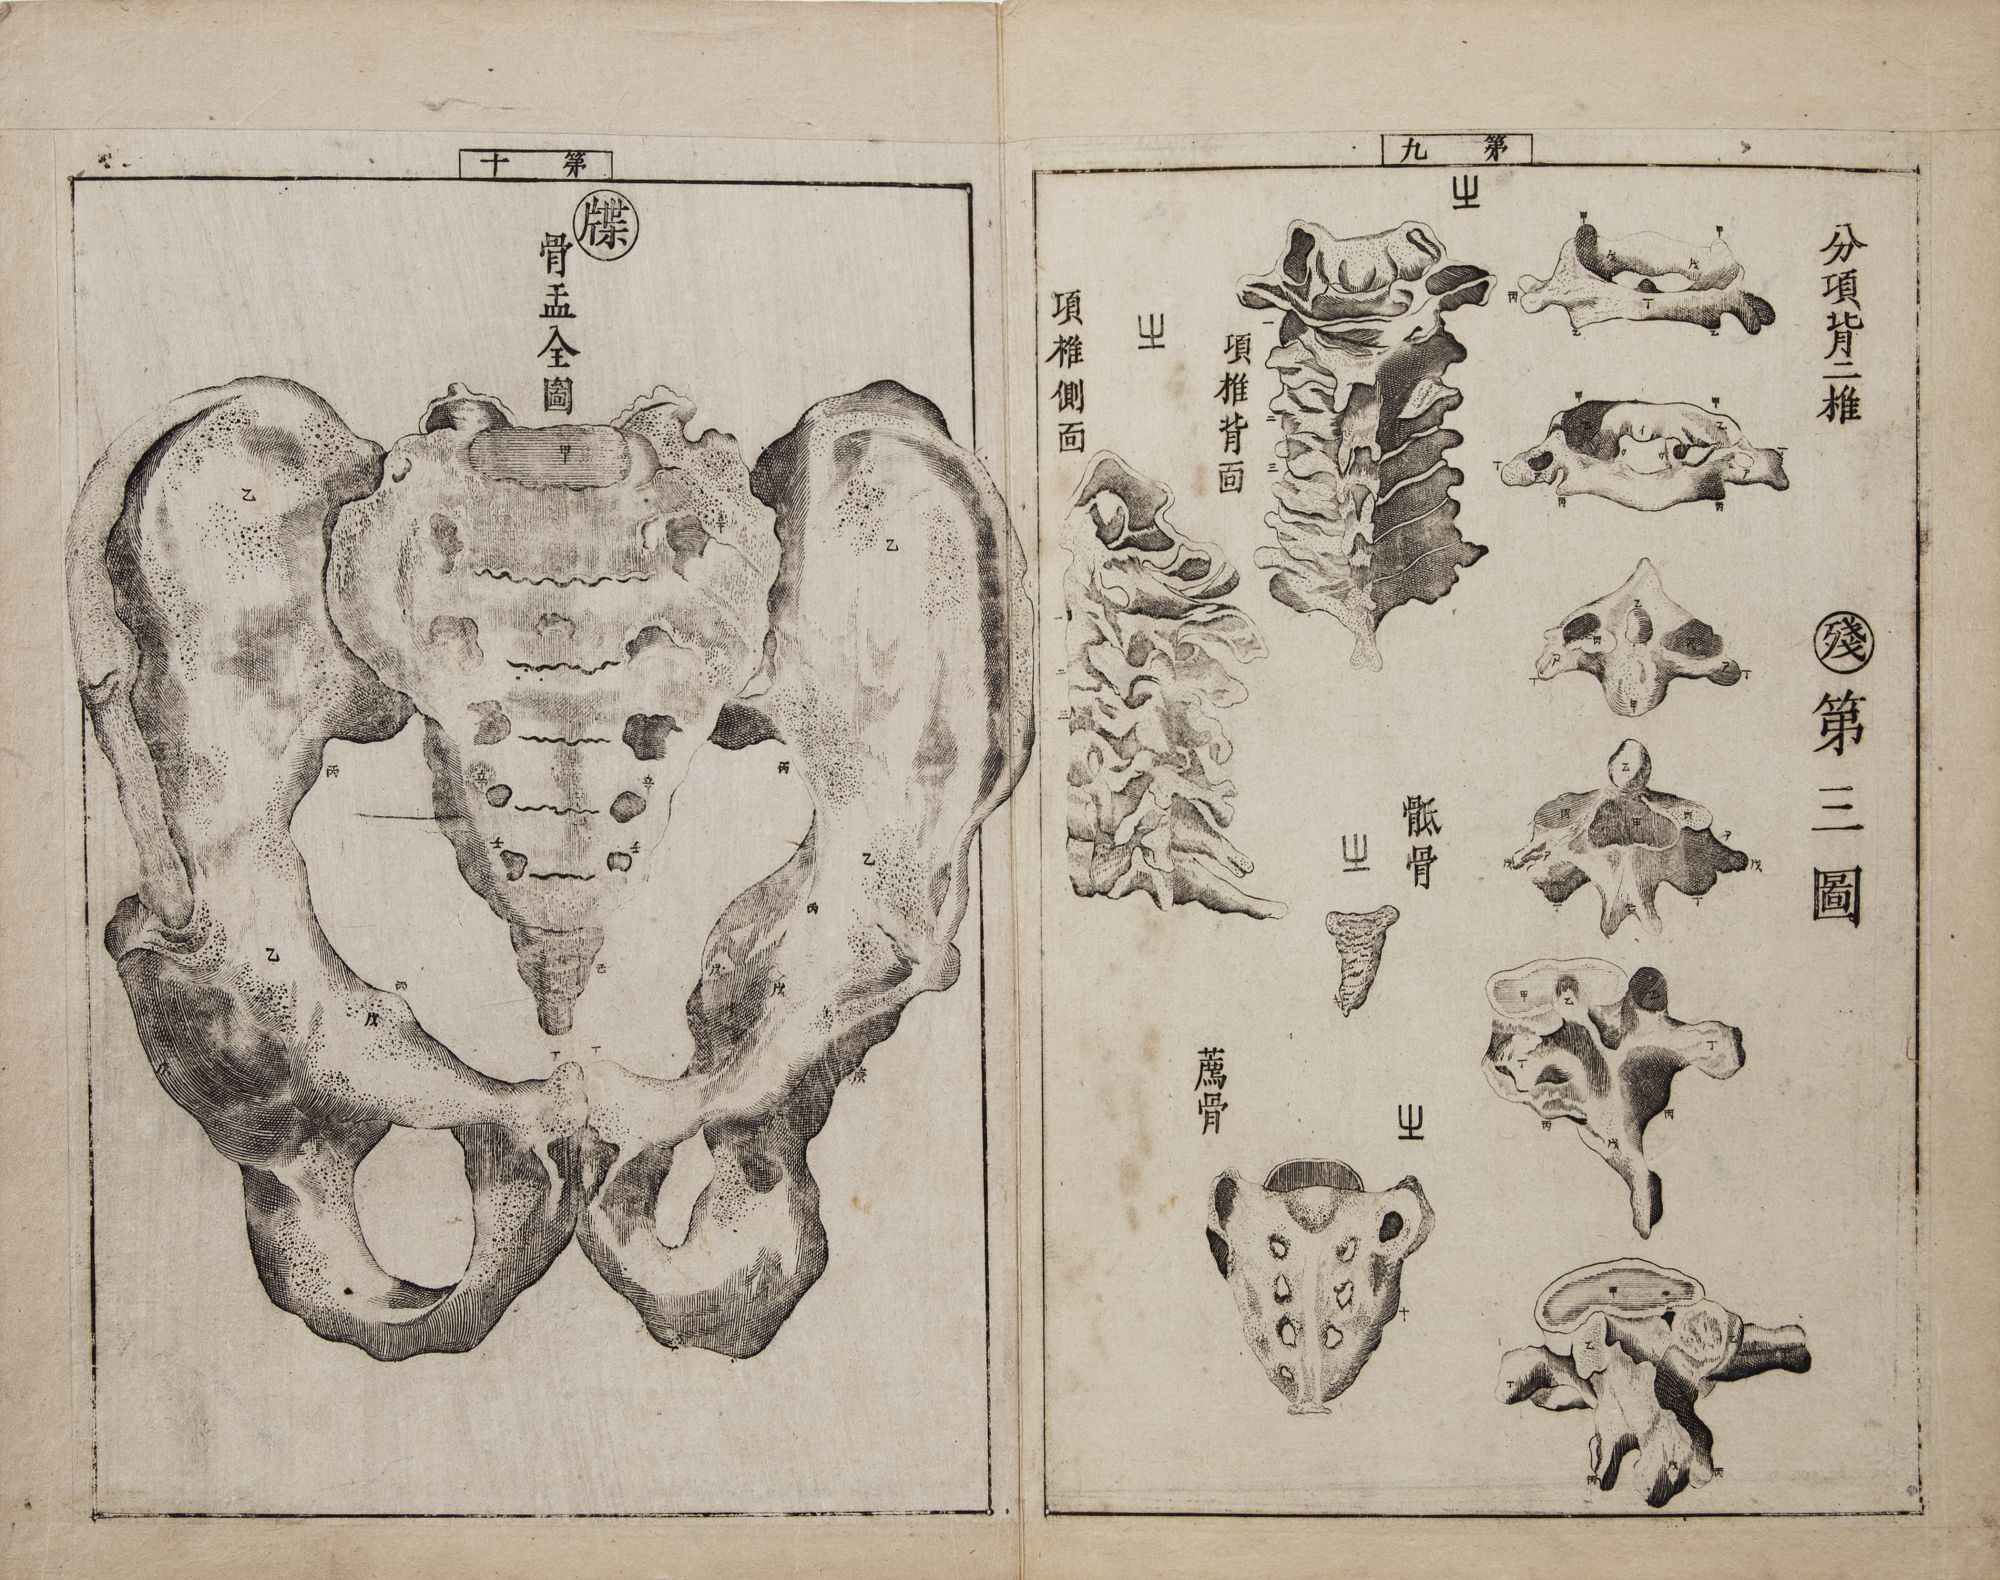 Jūtei kaitai shinsho 重訂解體新書 Revised Edition of a New Book of Anatomy by  Genpaku 杉田玄白 SUGITA on JONATHAN A. HILL, BOOKSELLER, INC